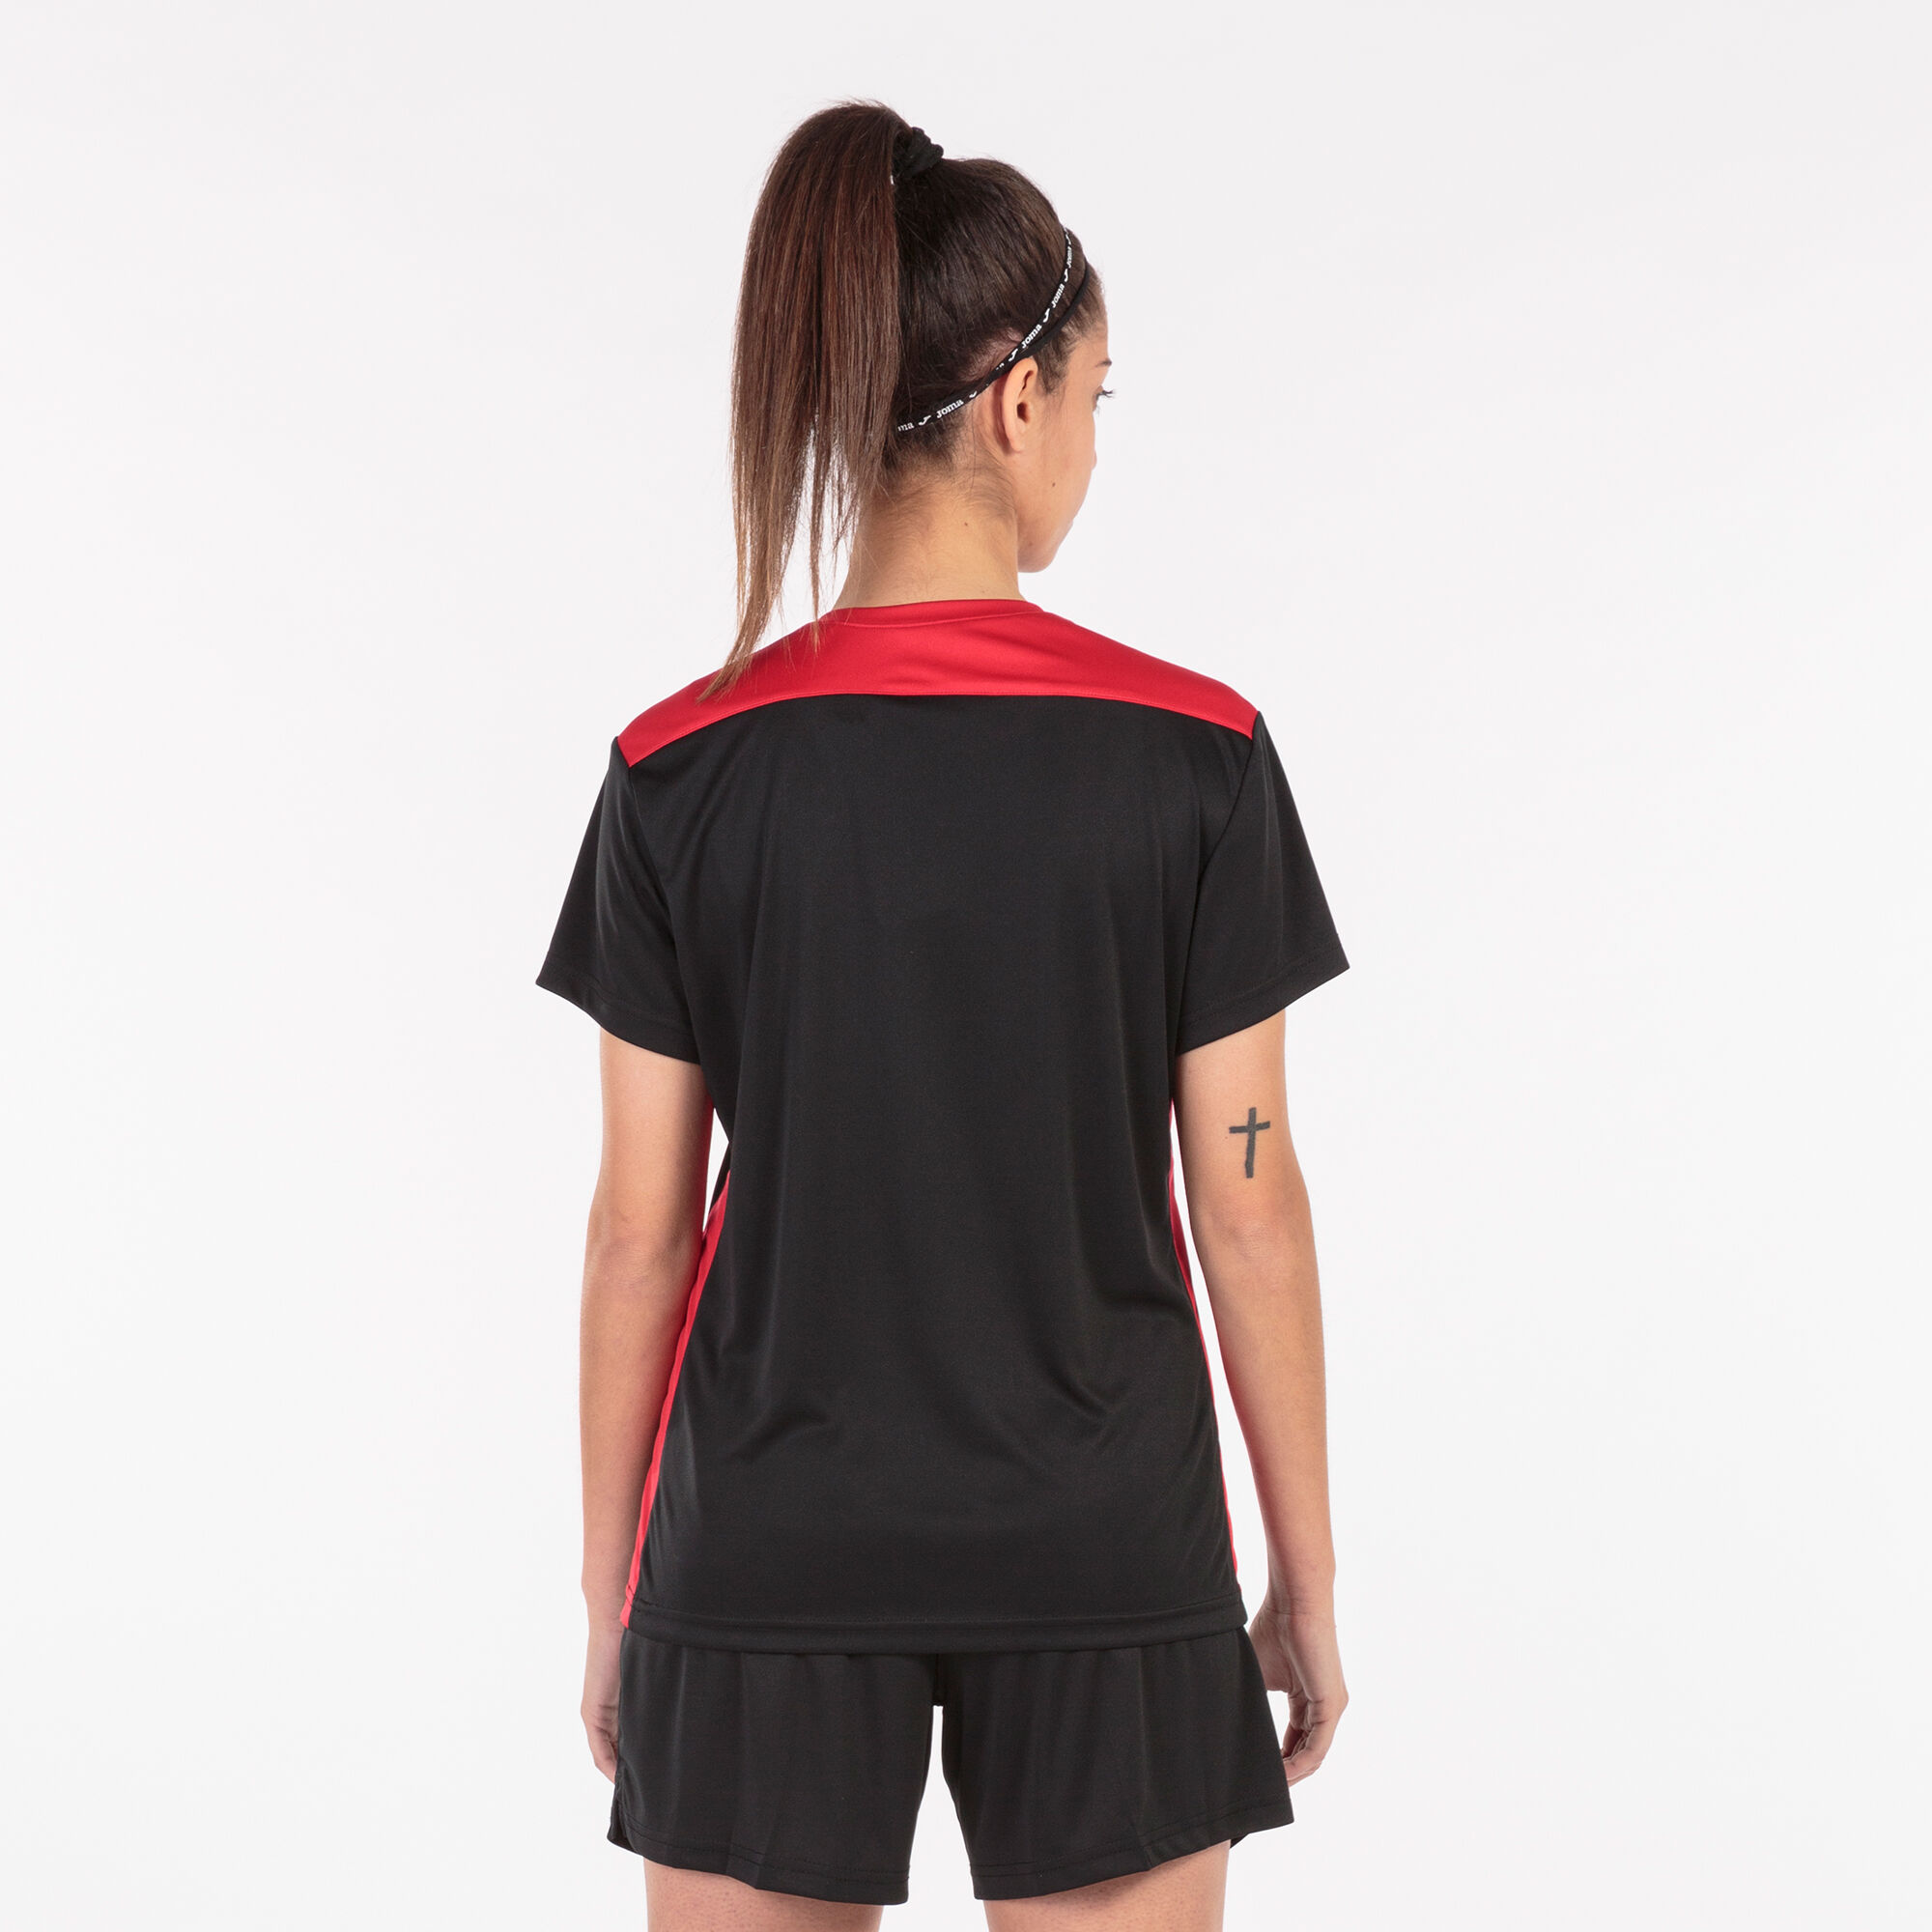 T-shirt manga curta mulher Championship VI preto vermelho